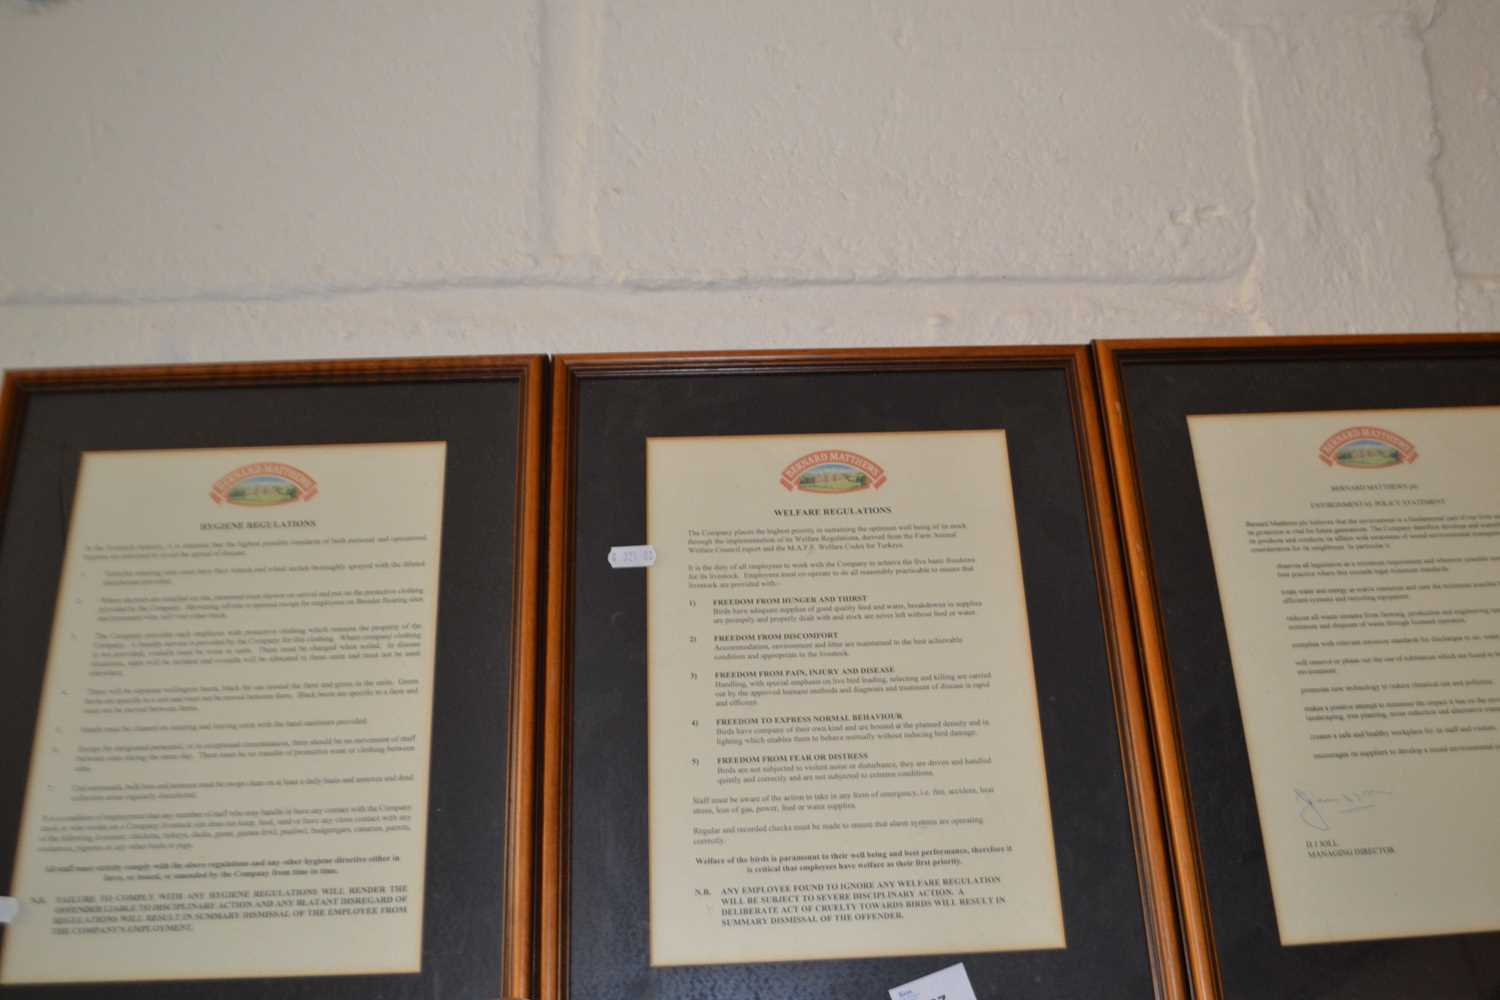 Three framed Bernard Matthews regulation signs